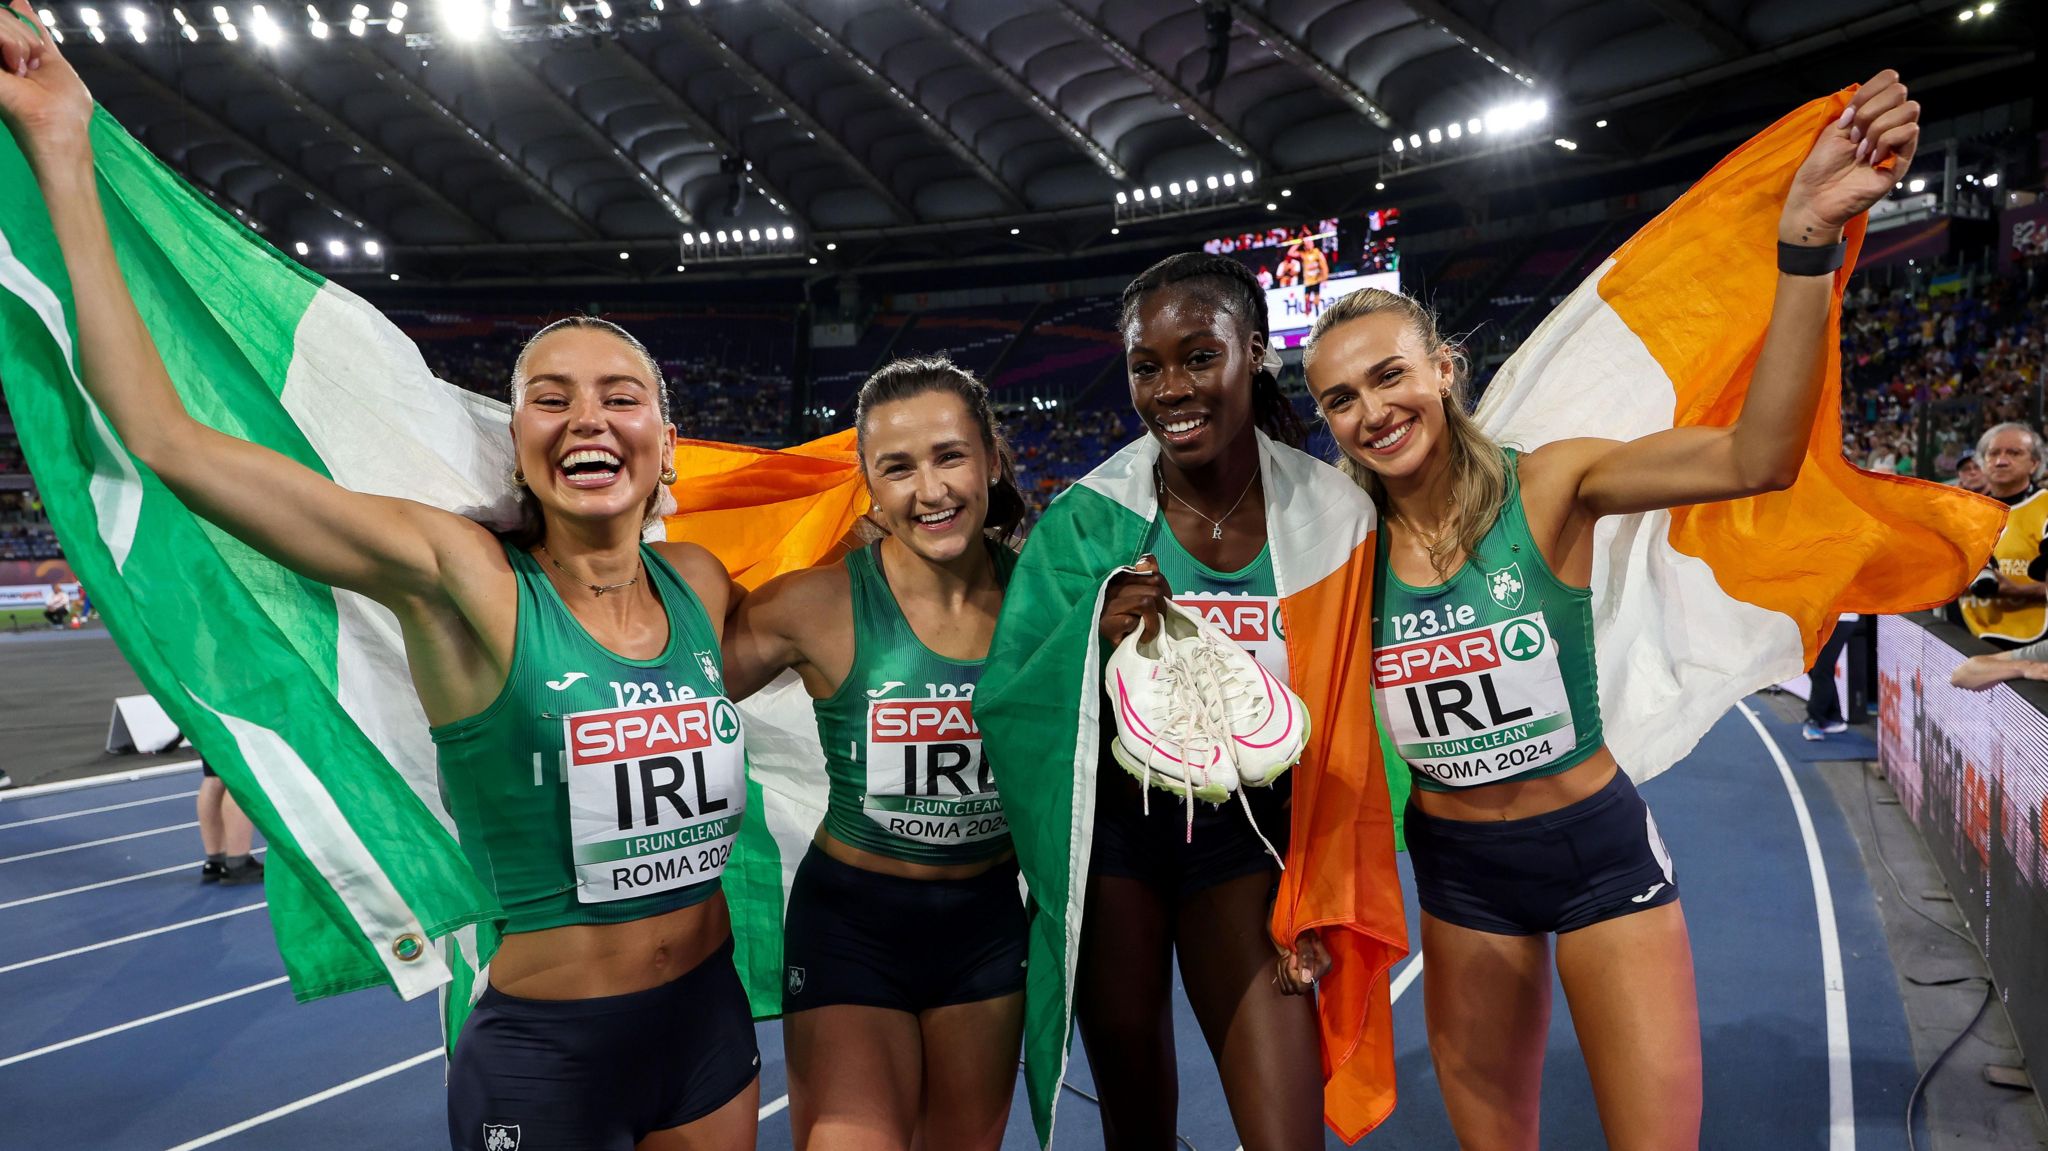 Ireland celebrate winning silver in the European Championships